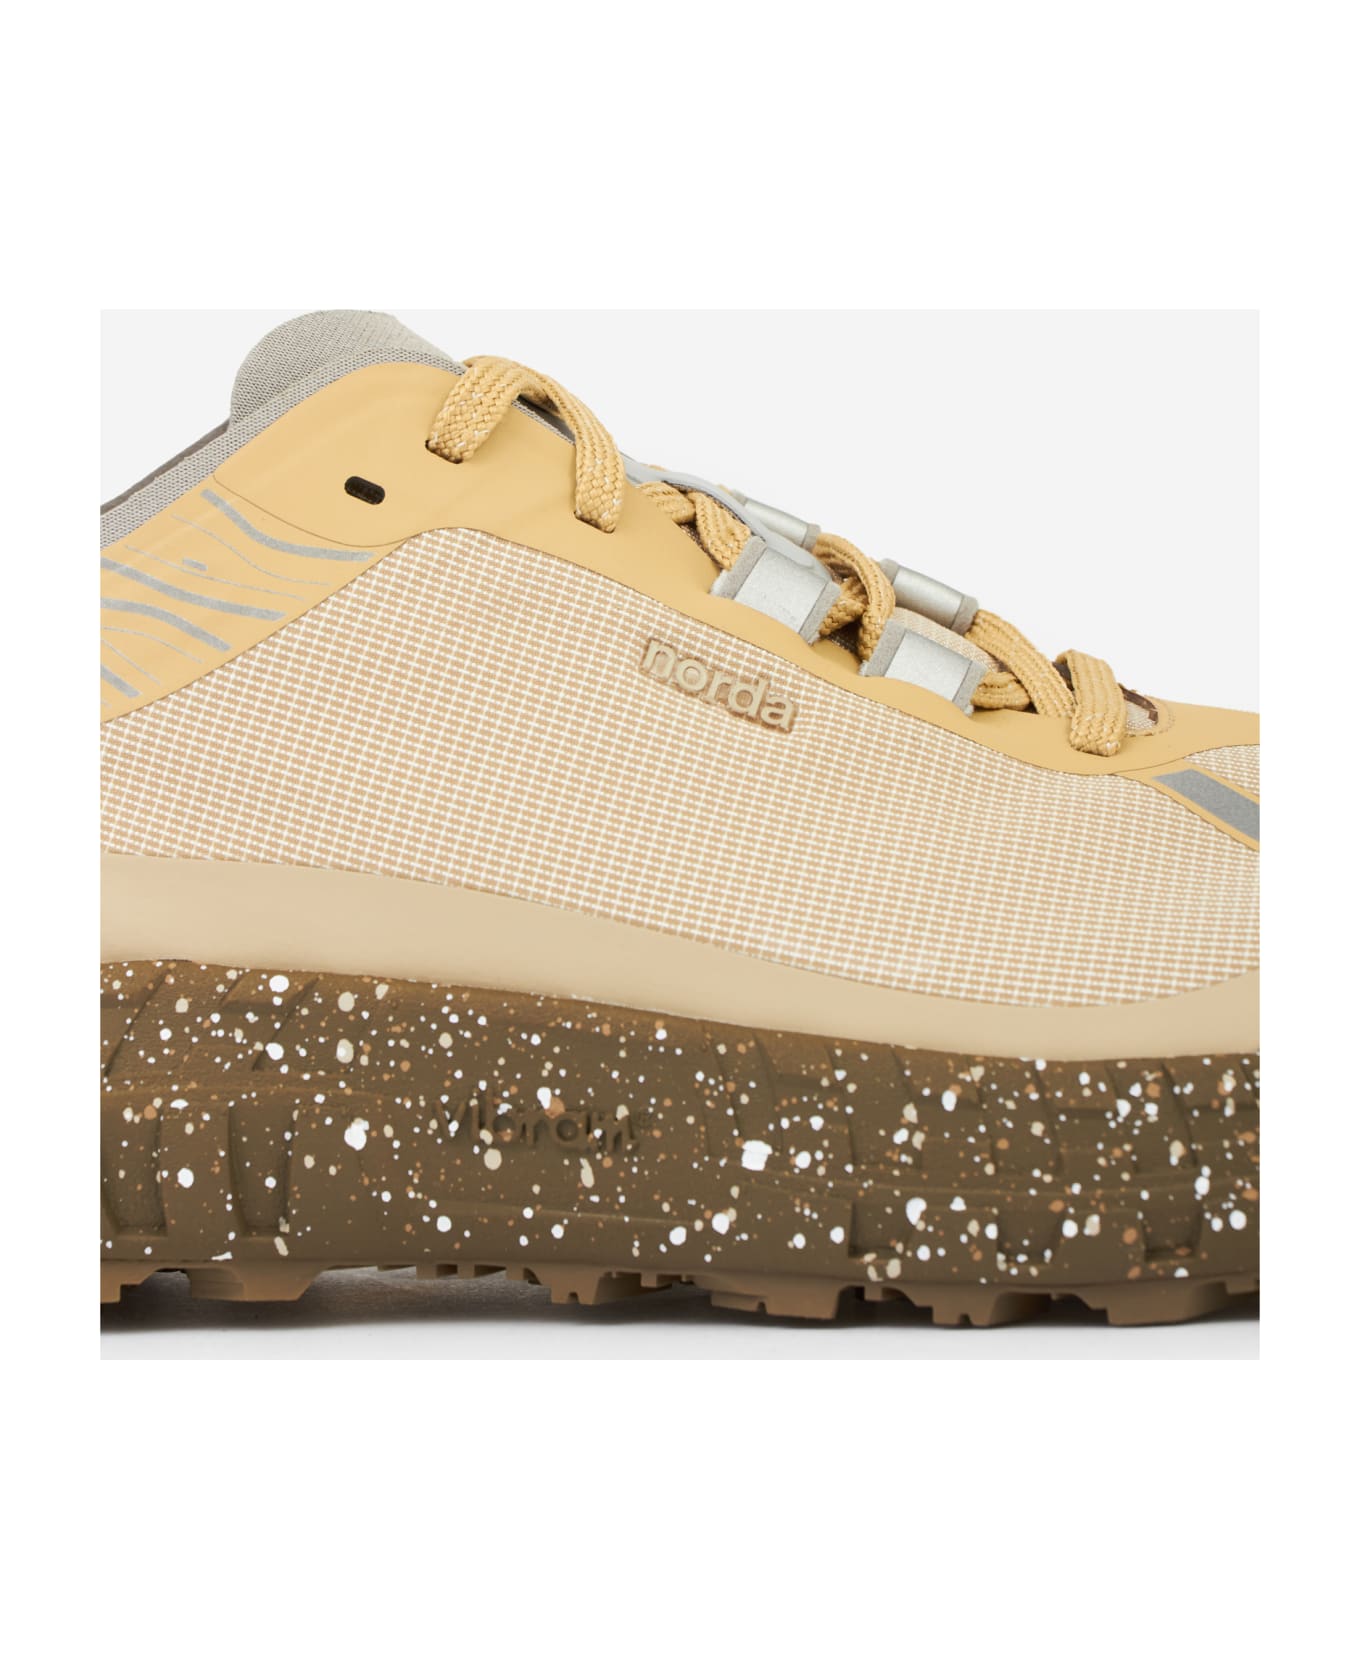 Norda The 001 M Sneakers - beige